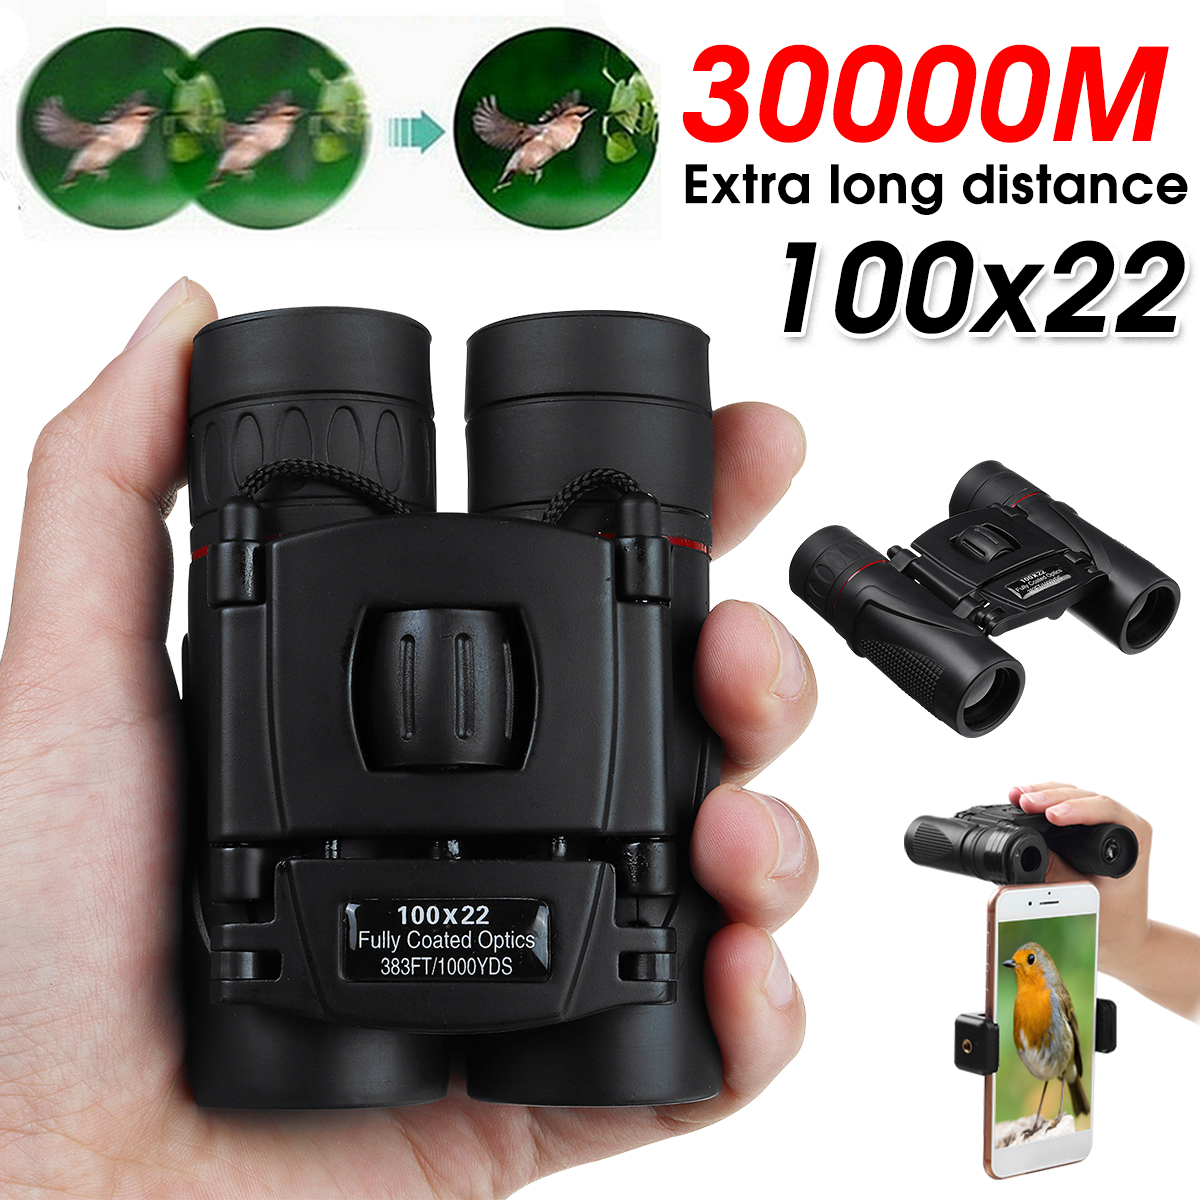 100X22-30000M-HD-Binoculars-Portable-High-Power-Folding-Zoom-Binoculars-Telescope-Outdoor-Hunting-Hi-1826886-2